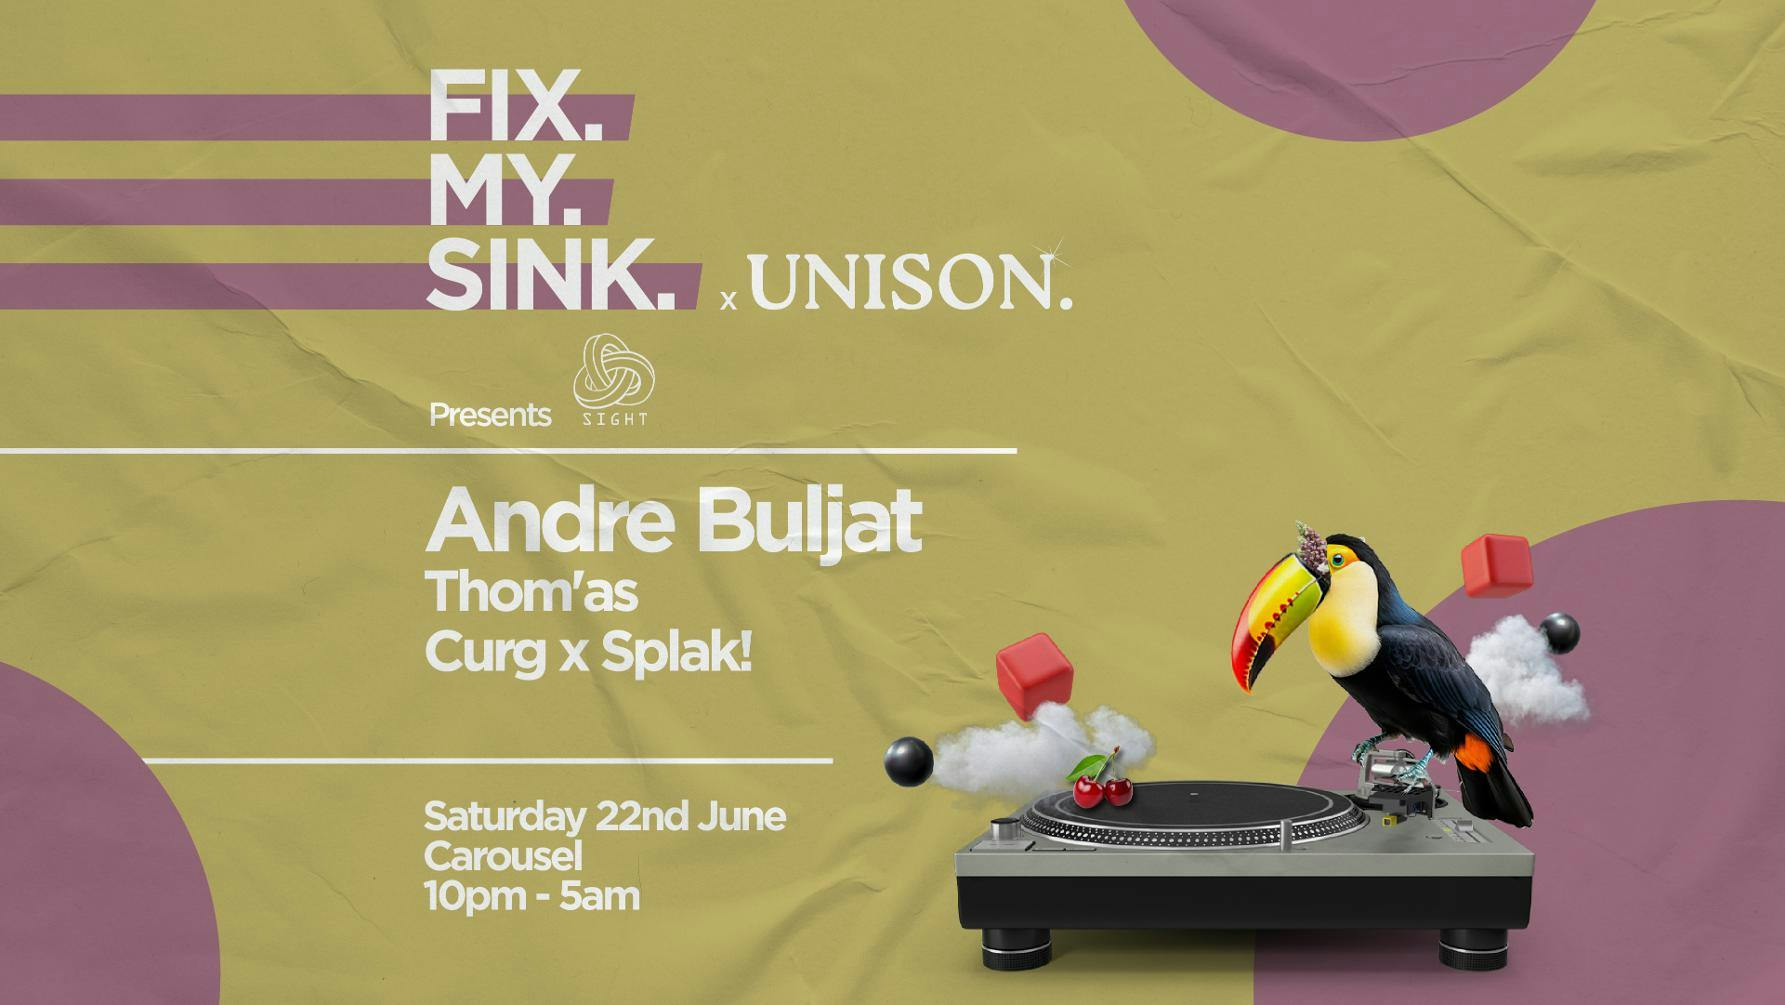 ╬ FIX. MY. SINK. & UNISON Present SIGHT Barcelona Ft. Andre Buljat ╬ Saturday June 22nd ╬